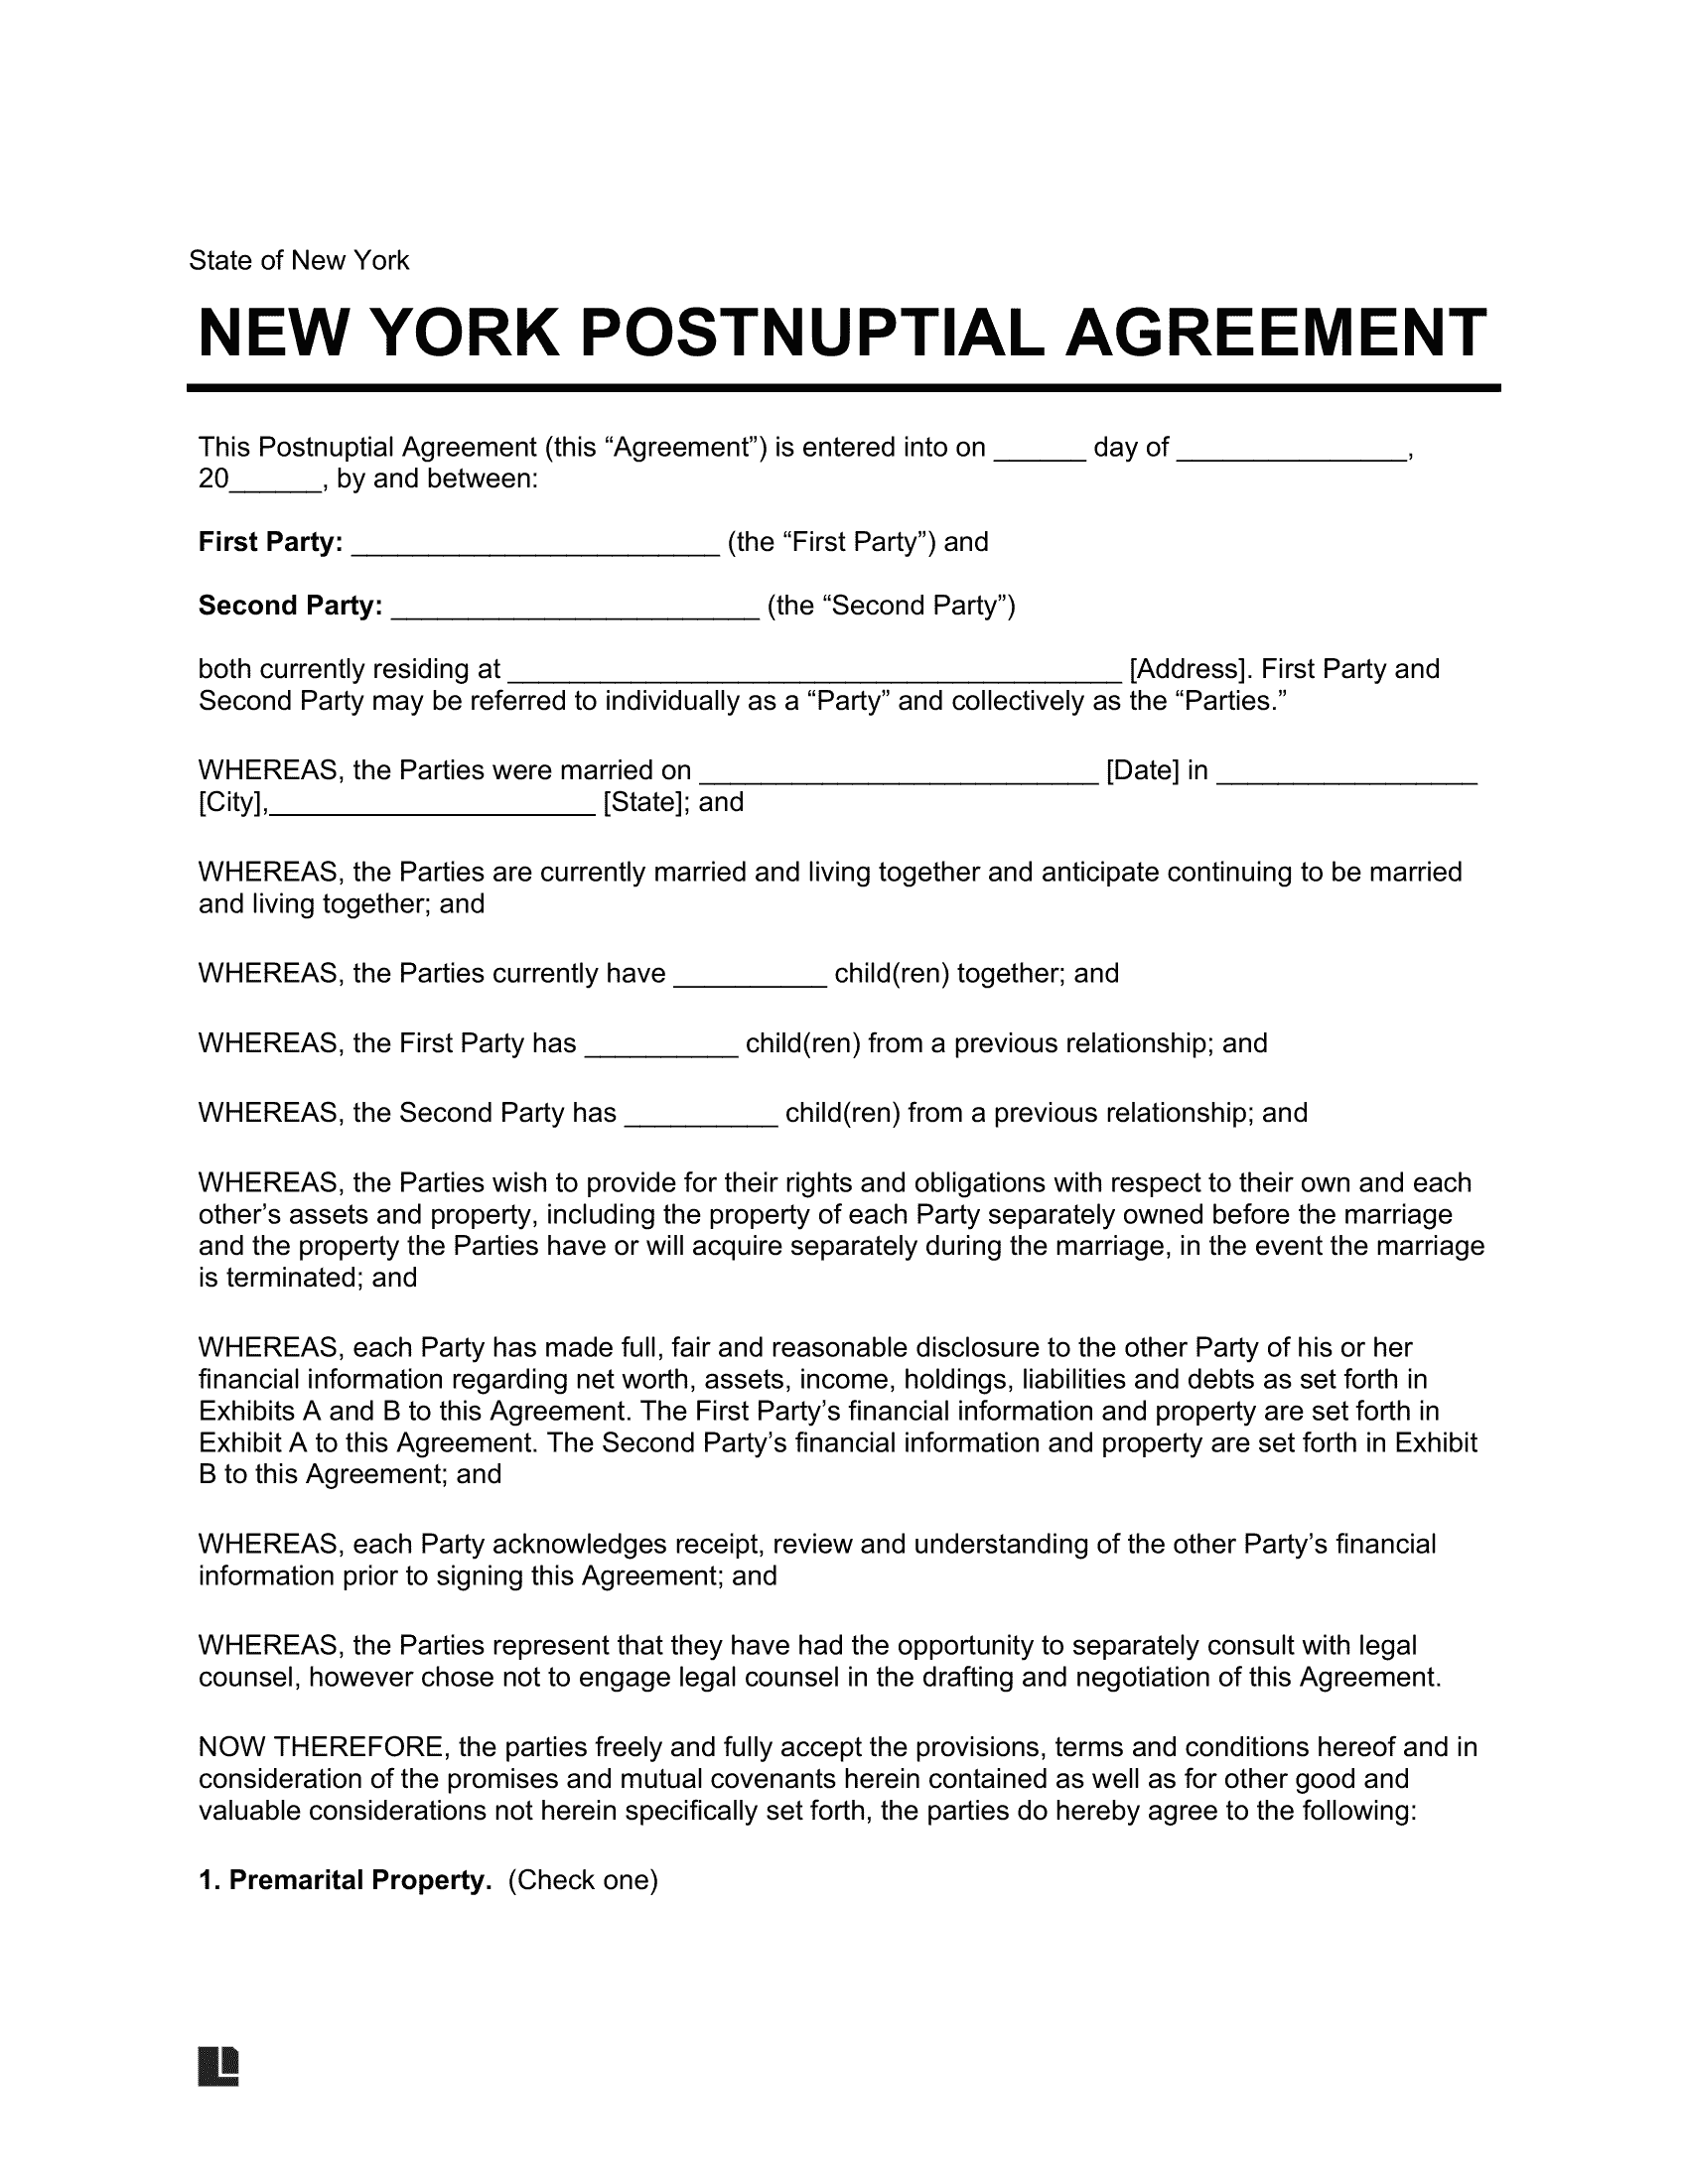 New York Postnuptial Agreement Template